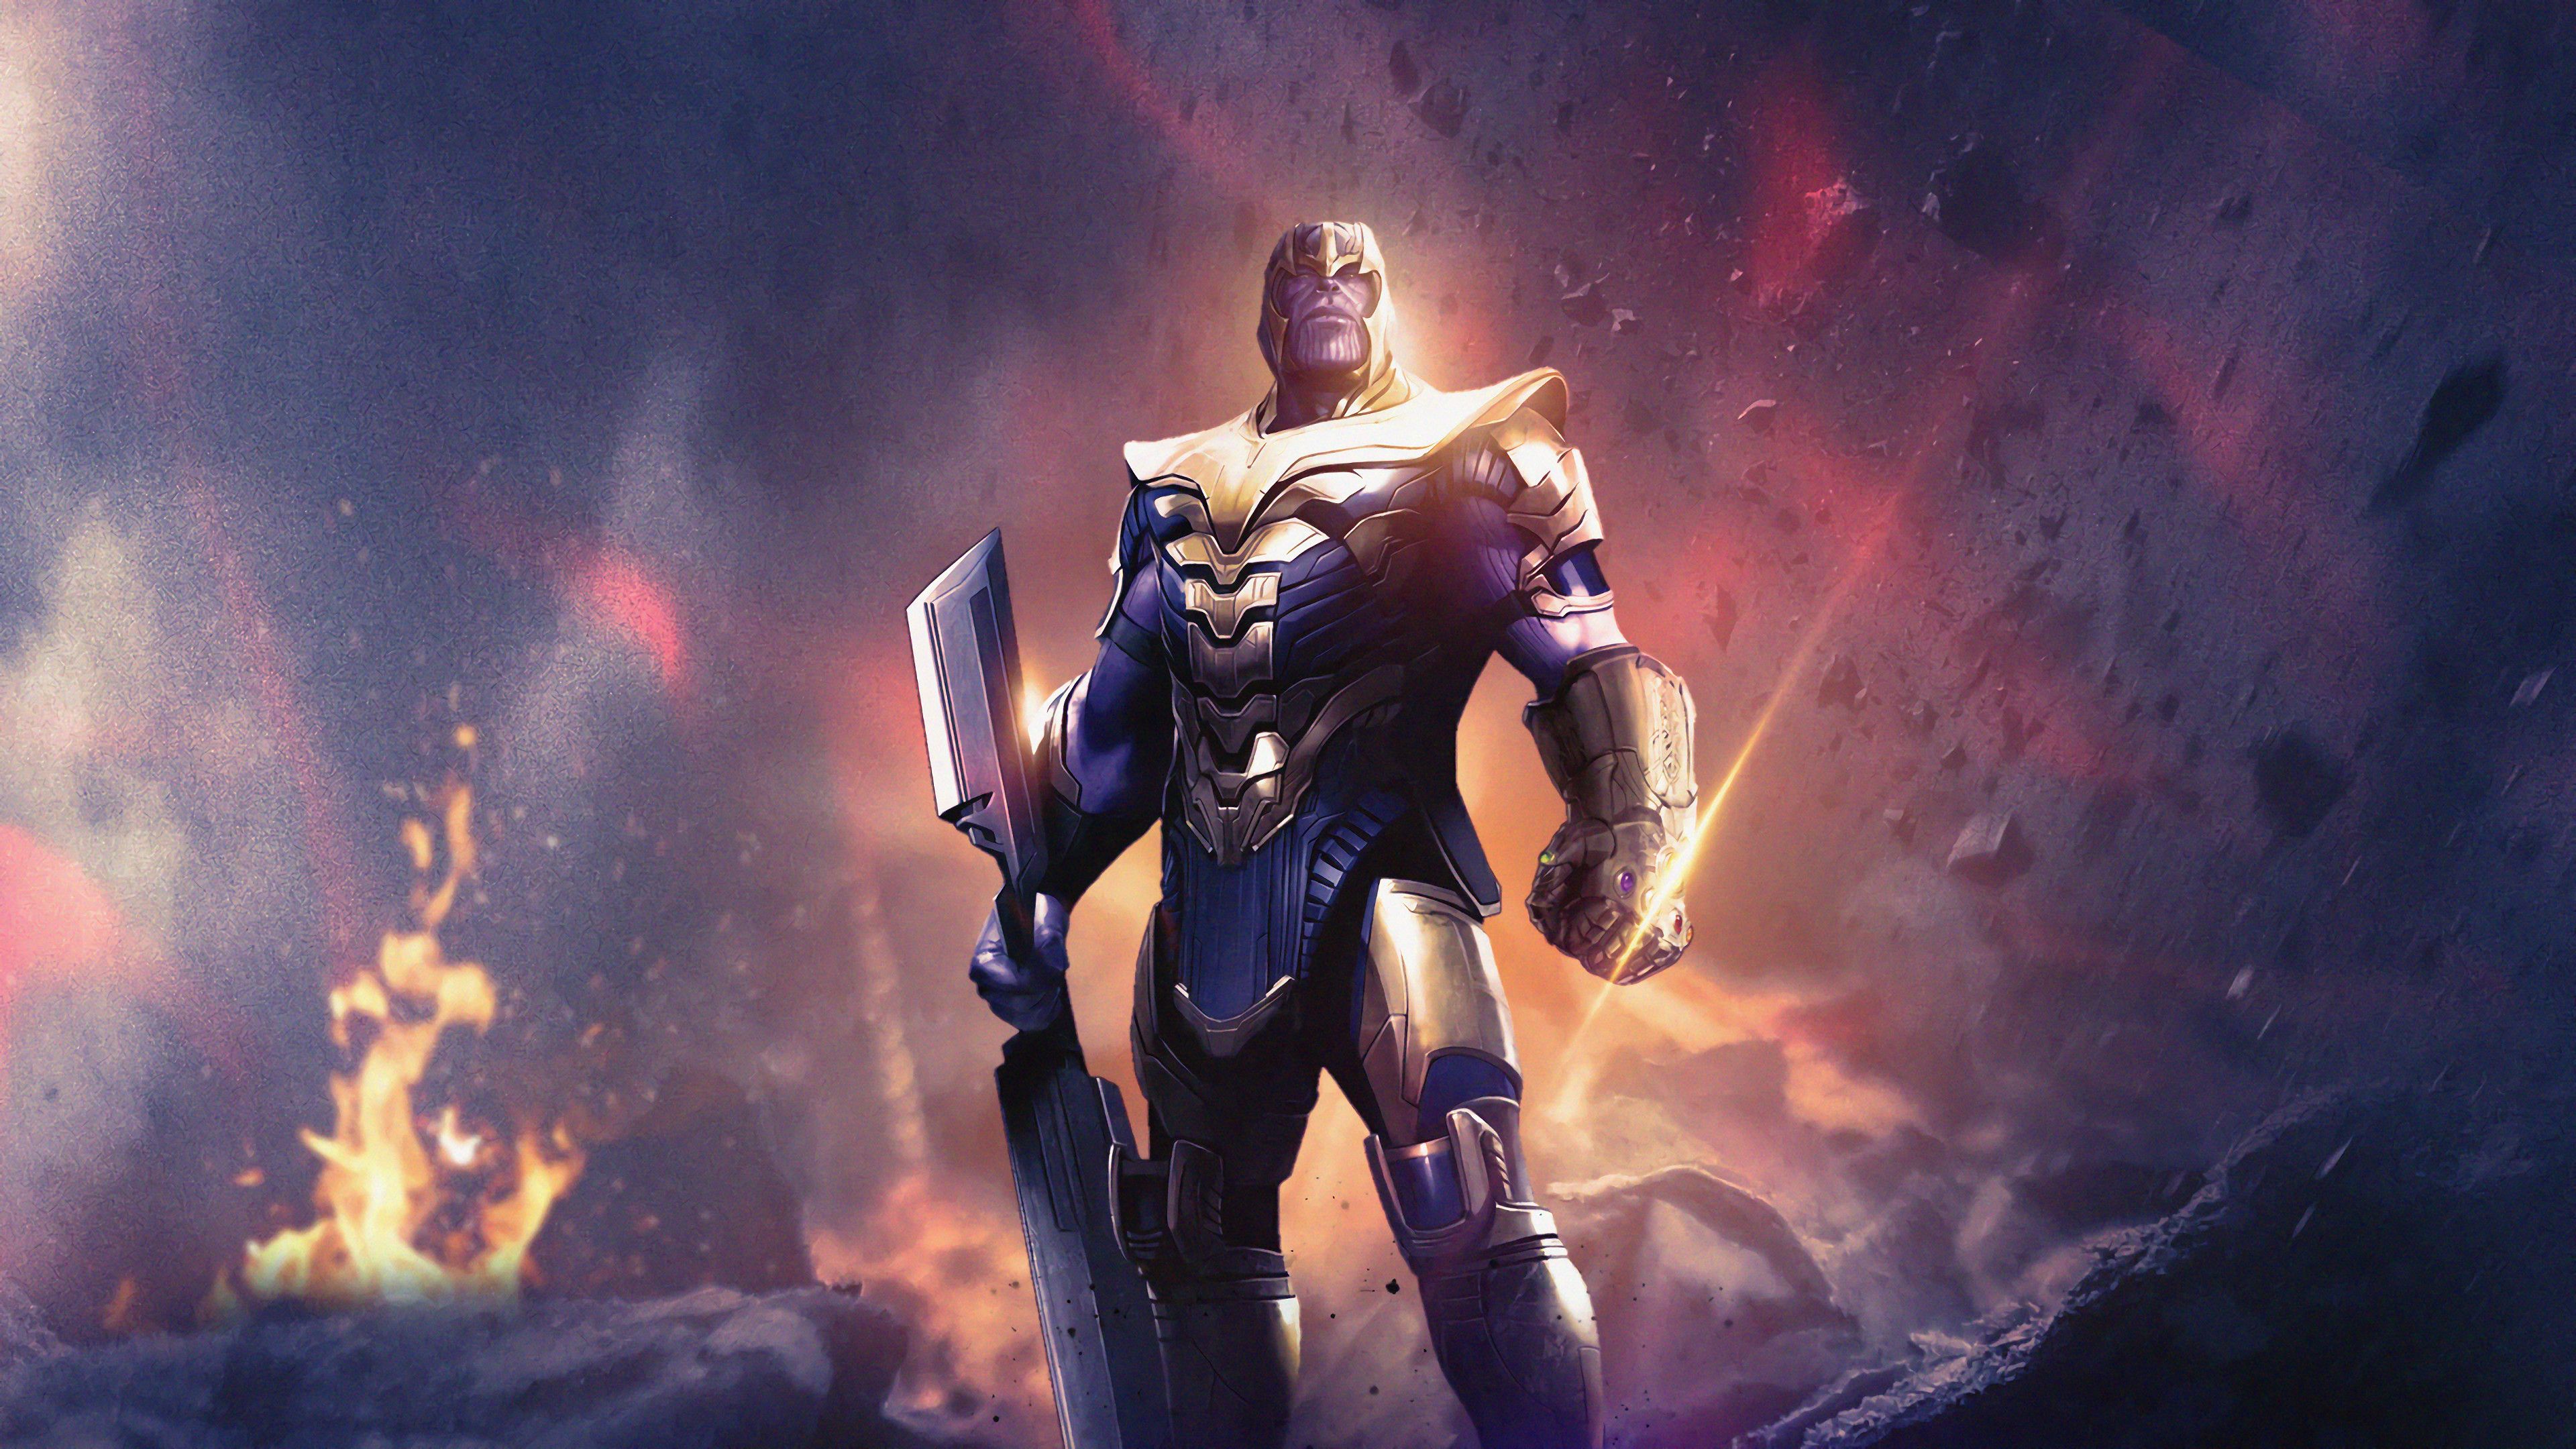 Avengers: Endgame Thanos Weapon Wallpaper 4k Ultra HD ID: 3092